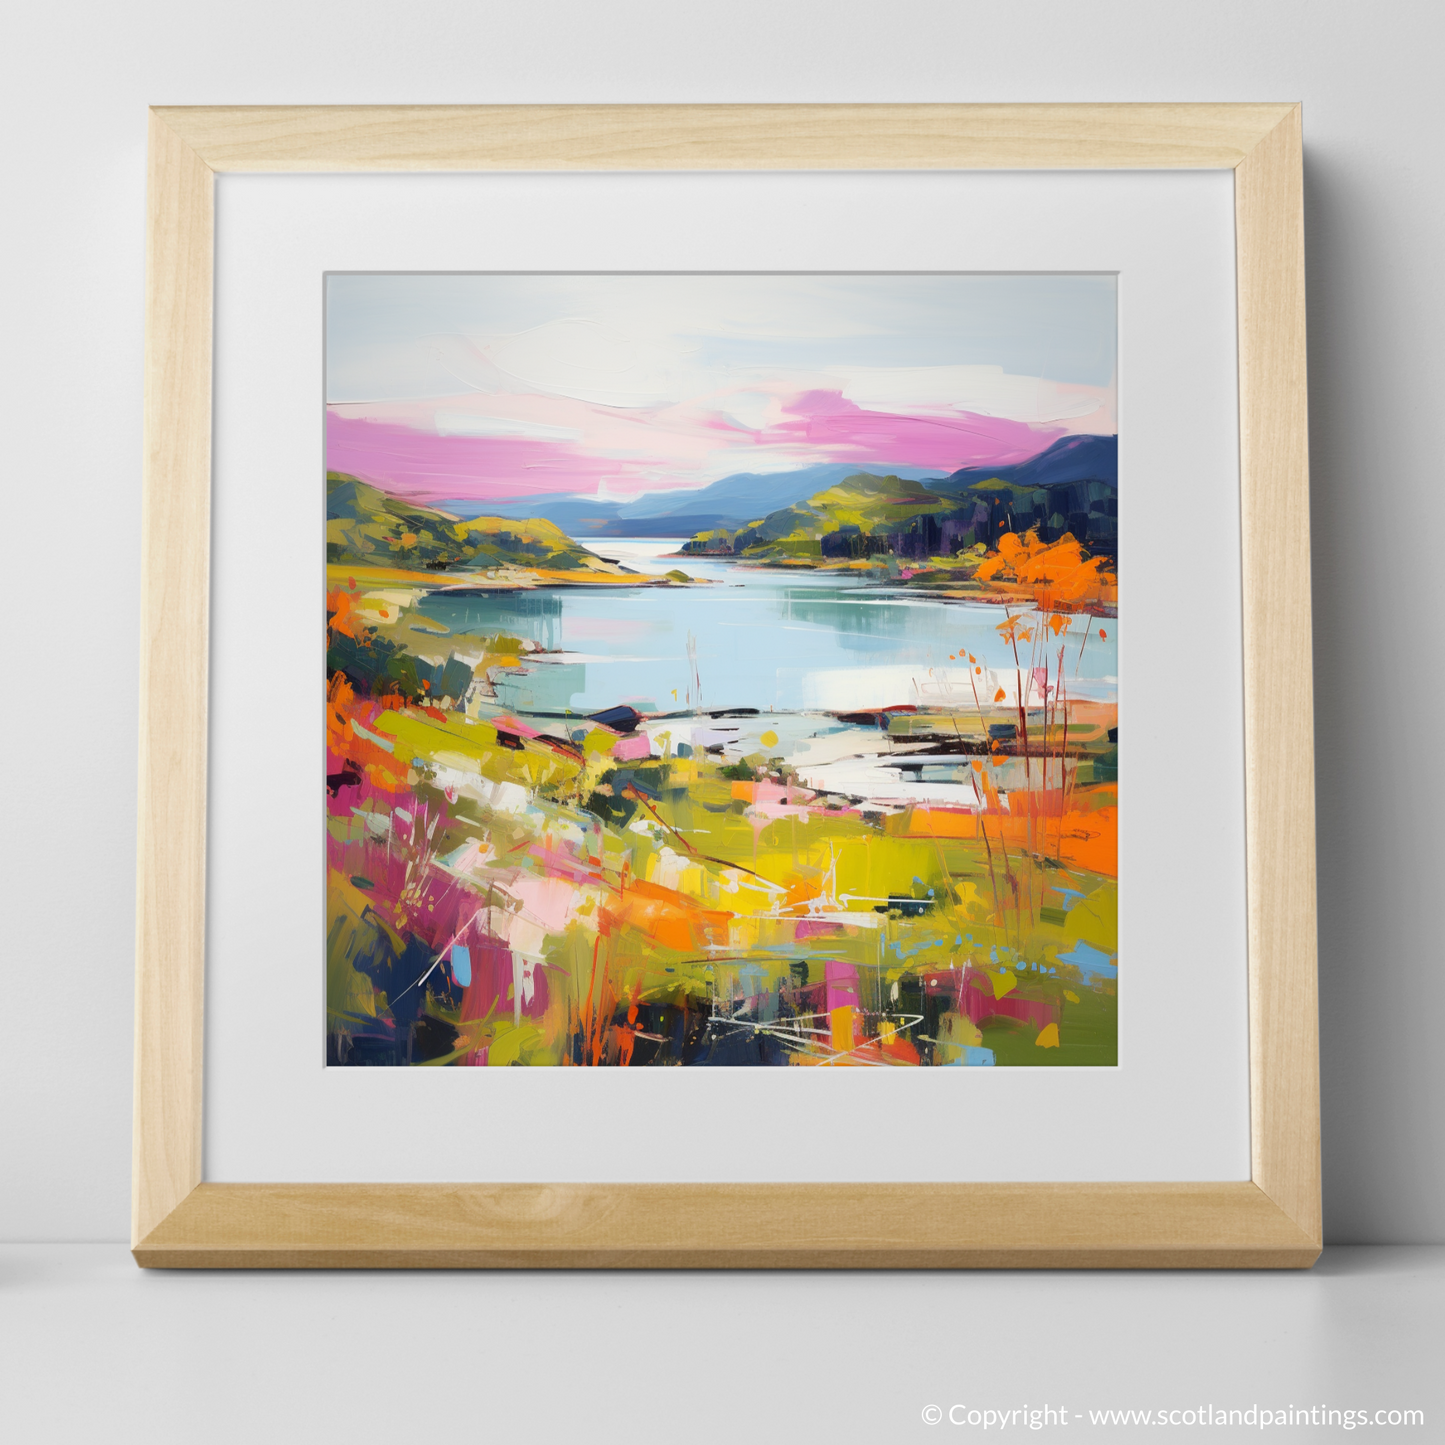 Art Print of Loch Morar, Highlands in summer with a natural frame